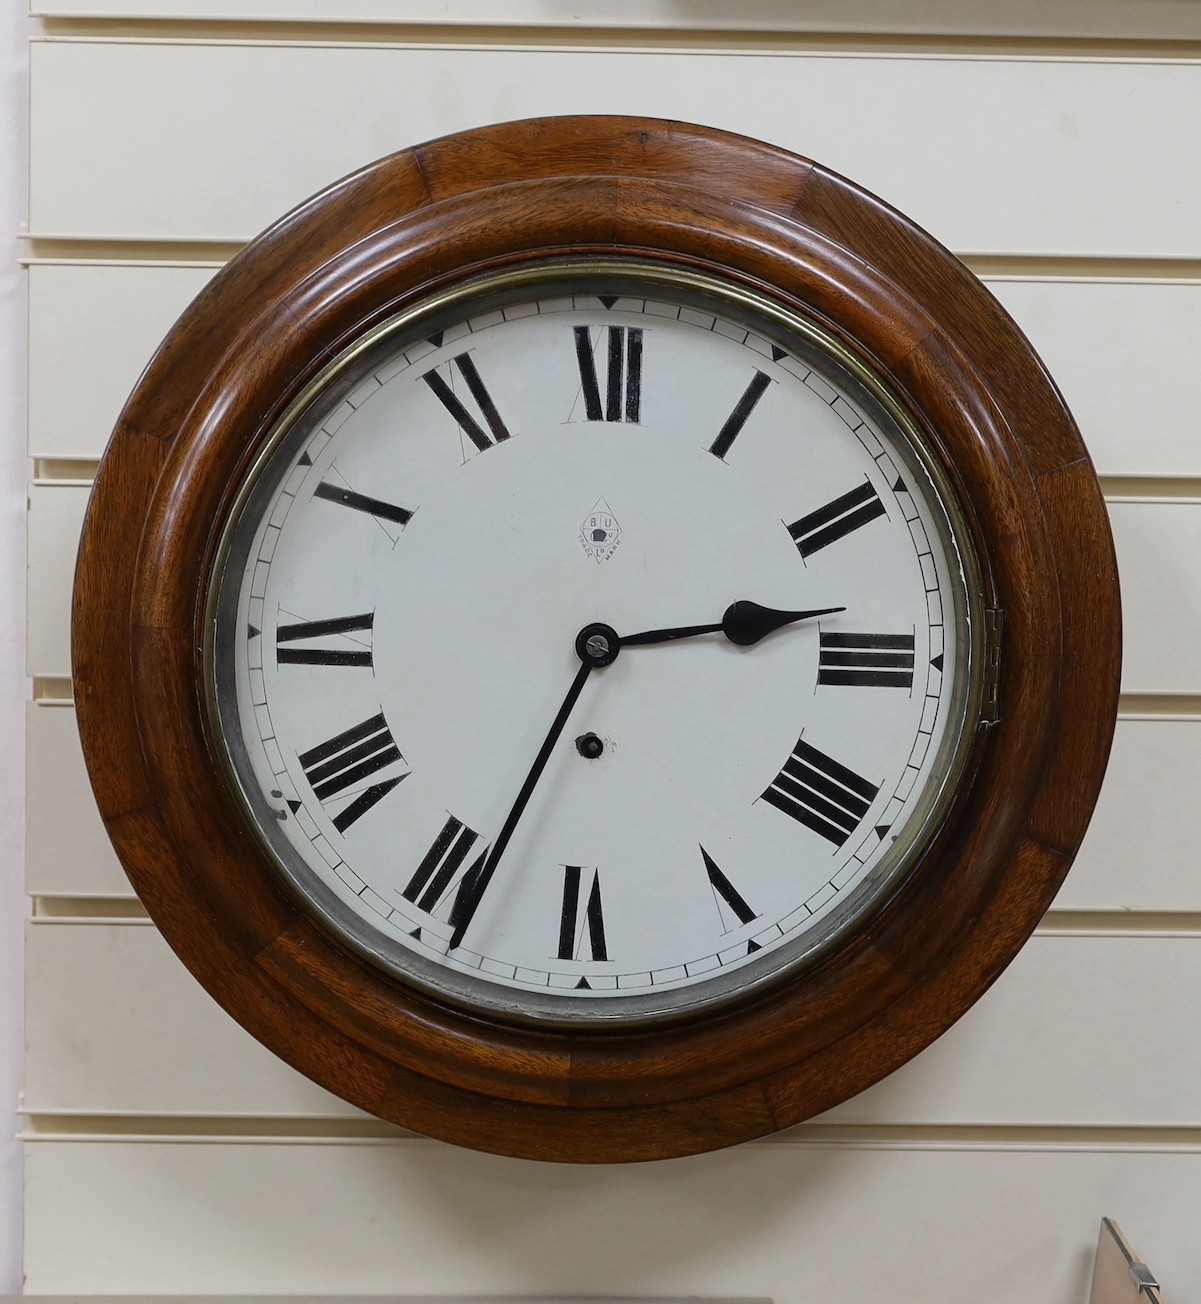 A mahogany dial clock - with key and pendulum, 44cm diameter